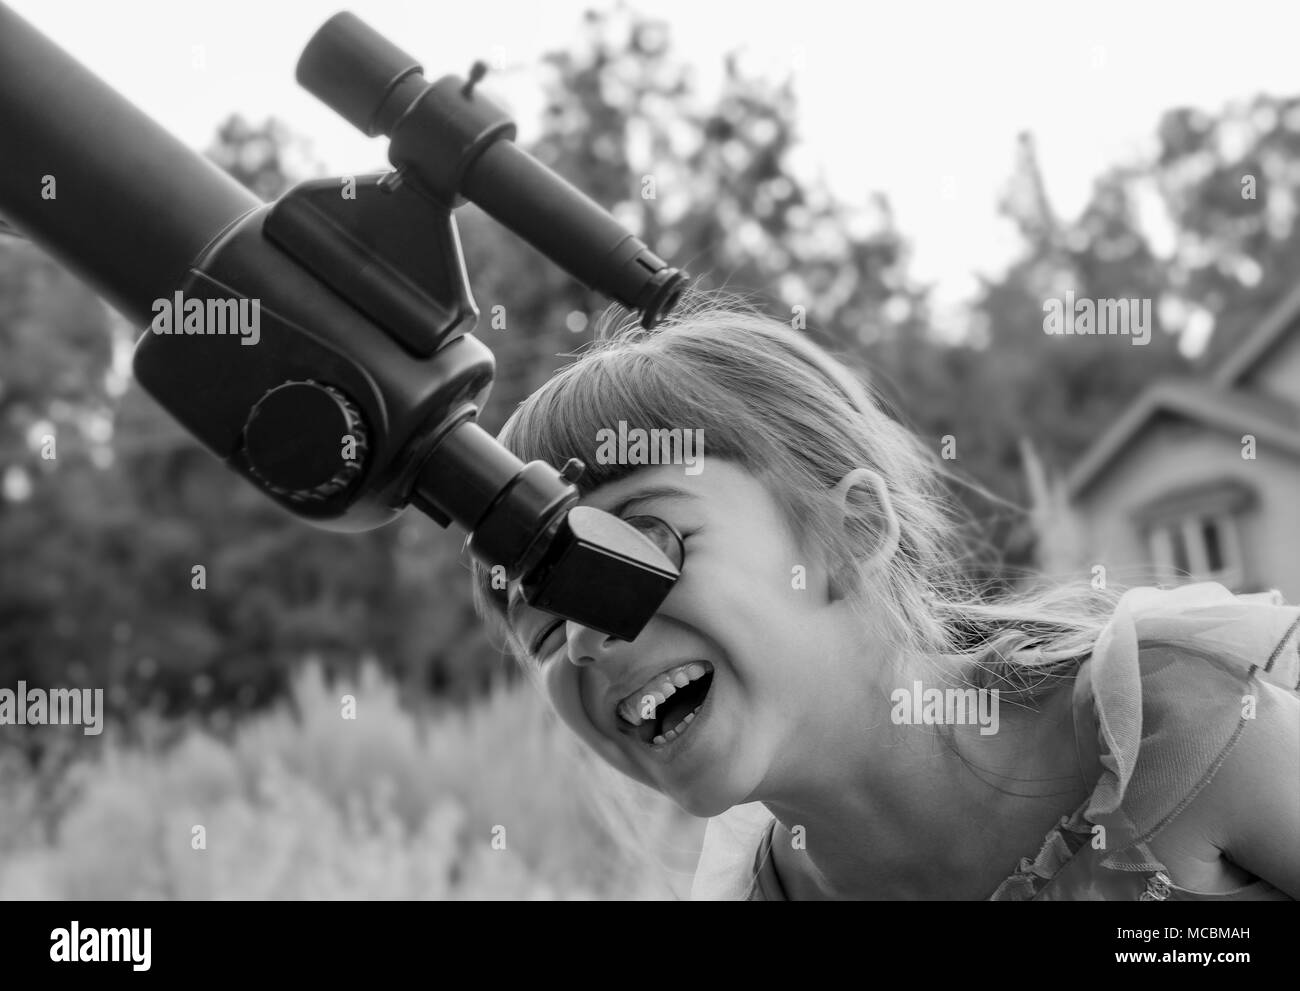 Cute Little Girl Looking Through a Telescope Stock Photo